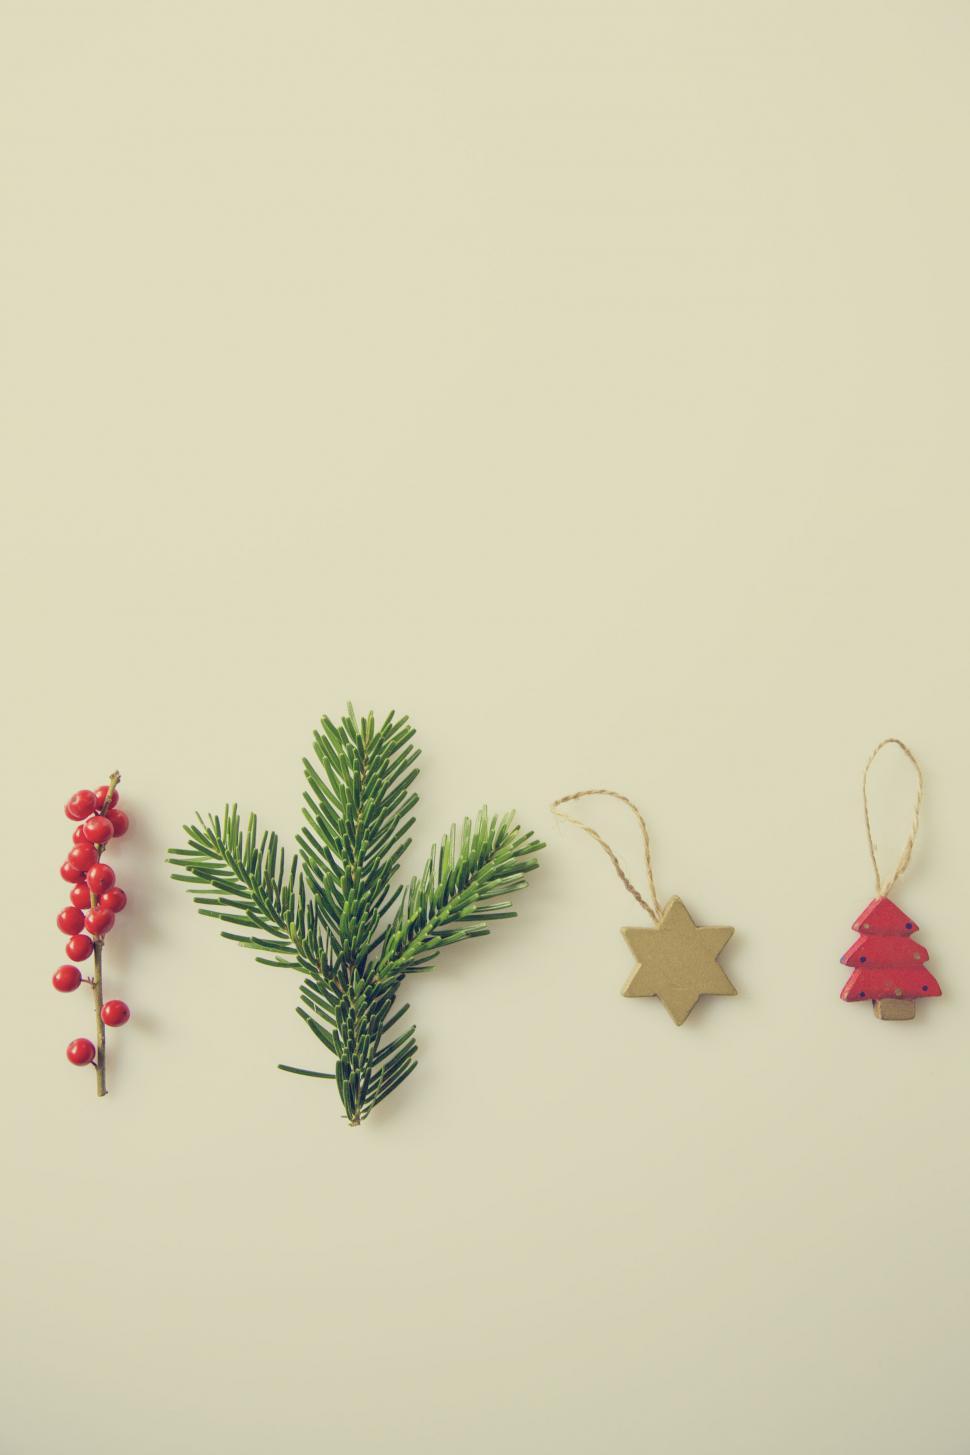 Free Image of Minimal Christmas decoration on white space 